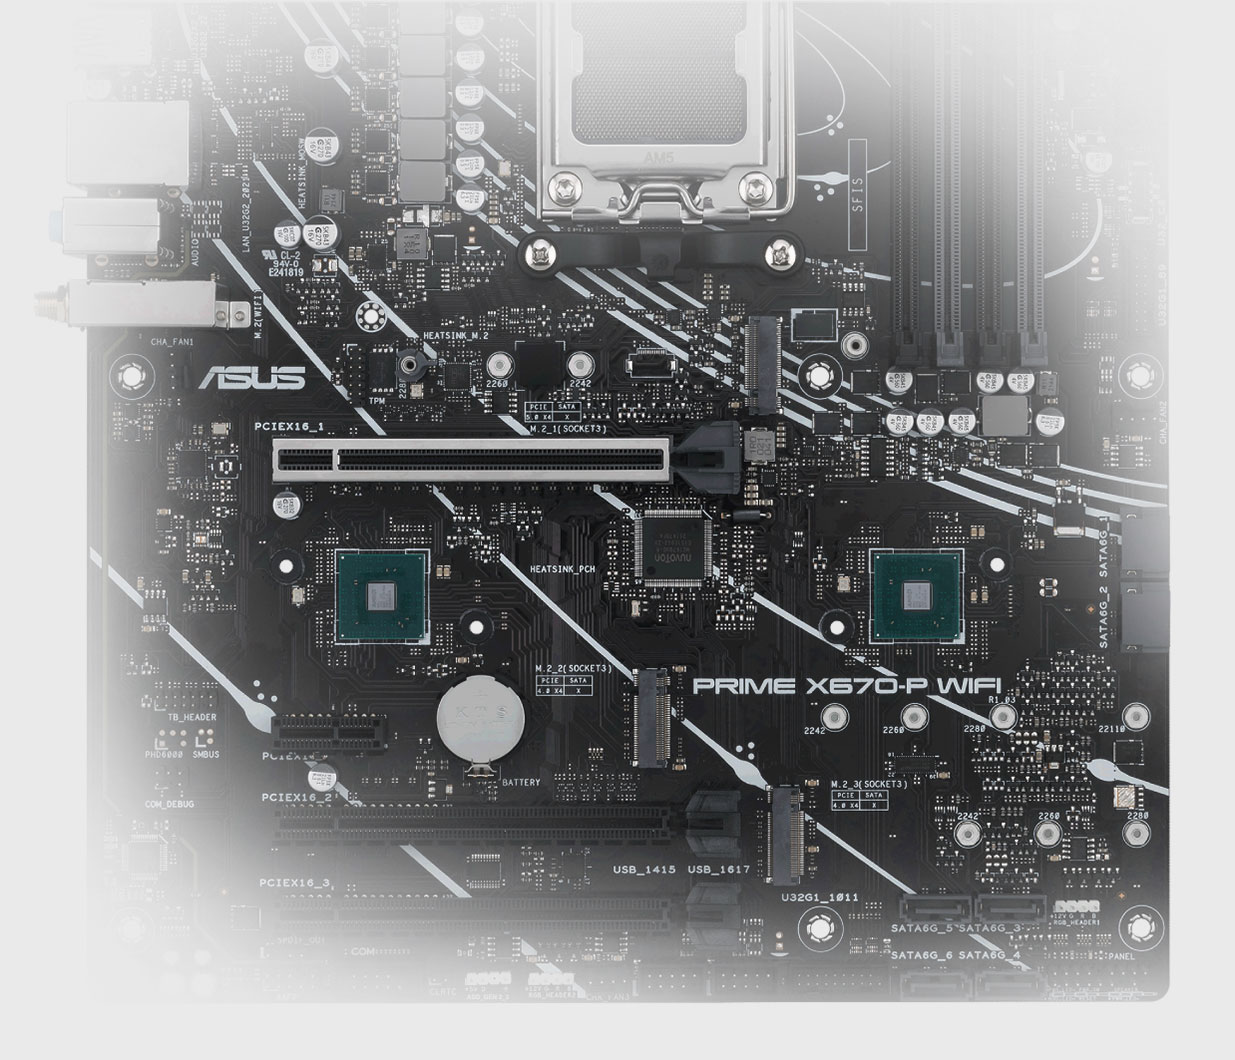 A motherboard PRIME X670-P WIFI suporta ranhura M.2 PCIe® 5.0.